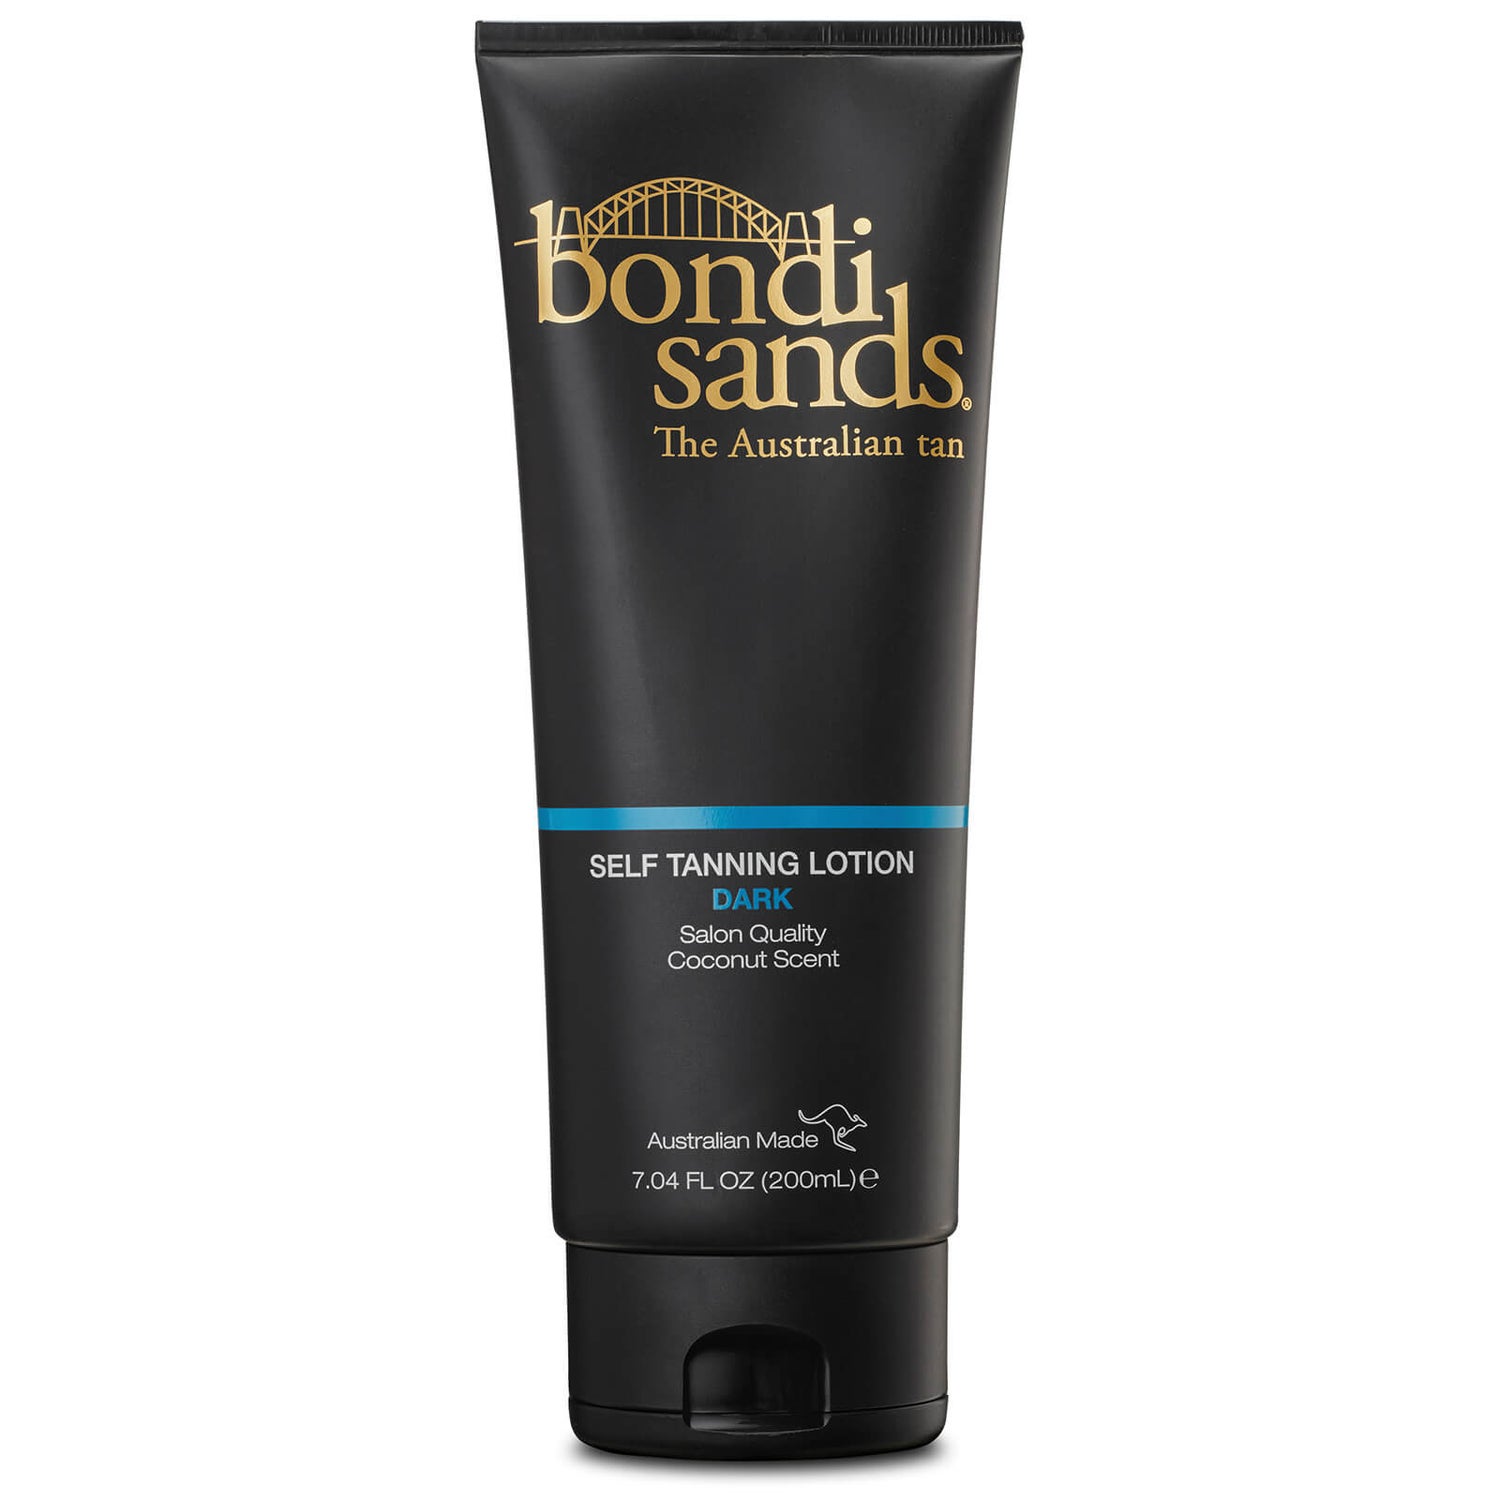 Bondi Sands Self Tanning Lotion 200 ml – Dark